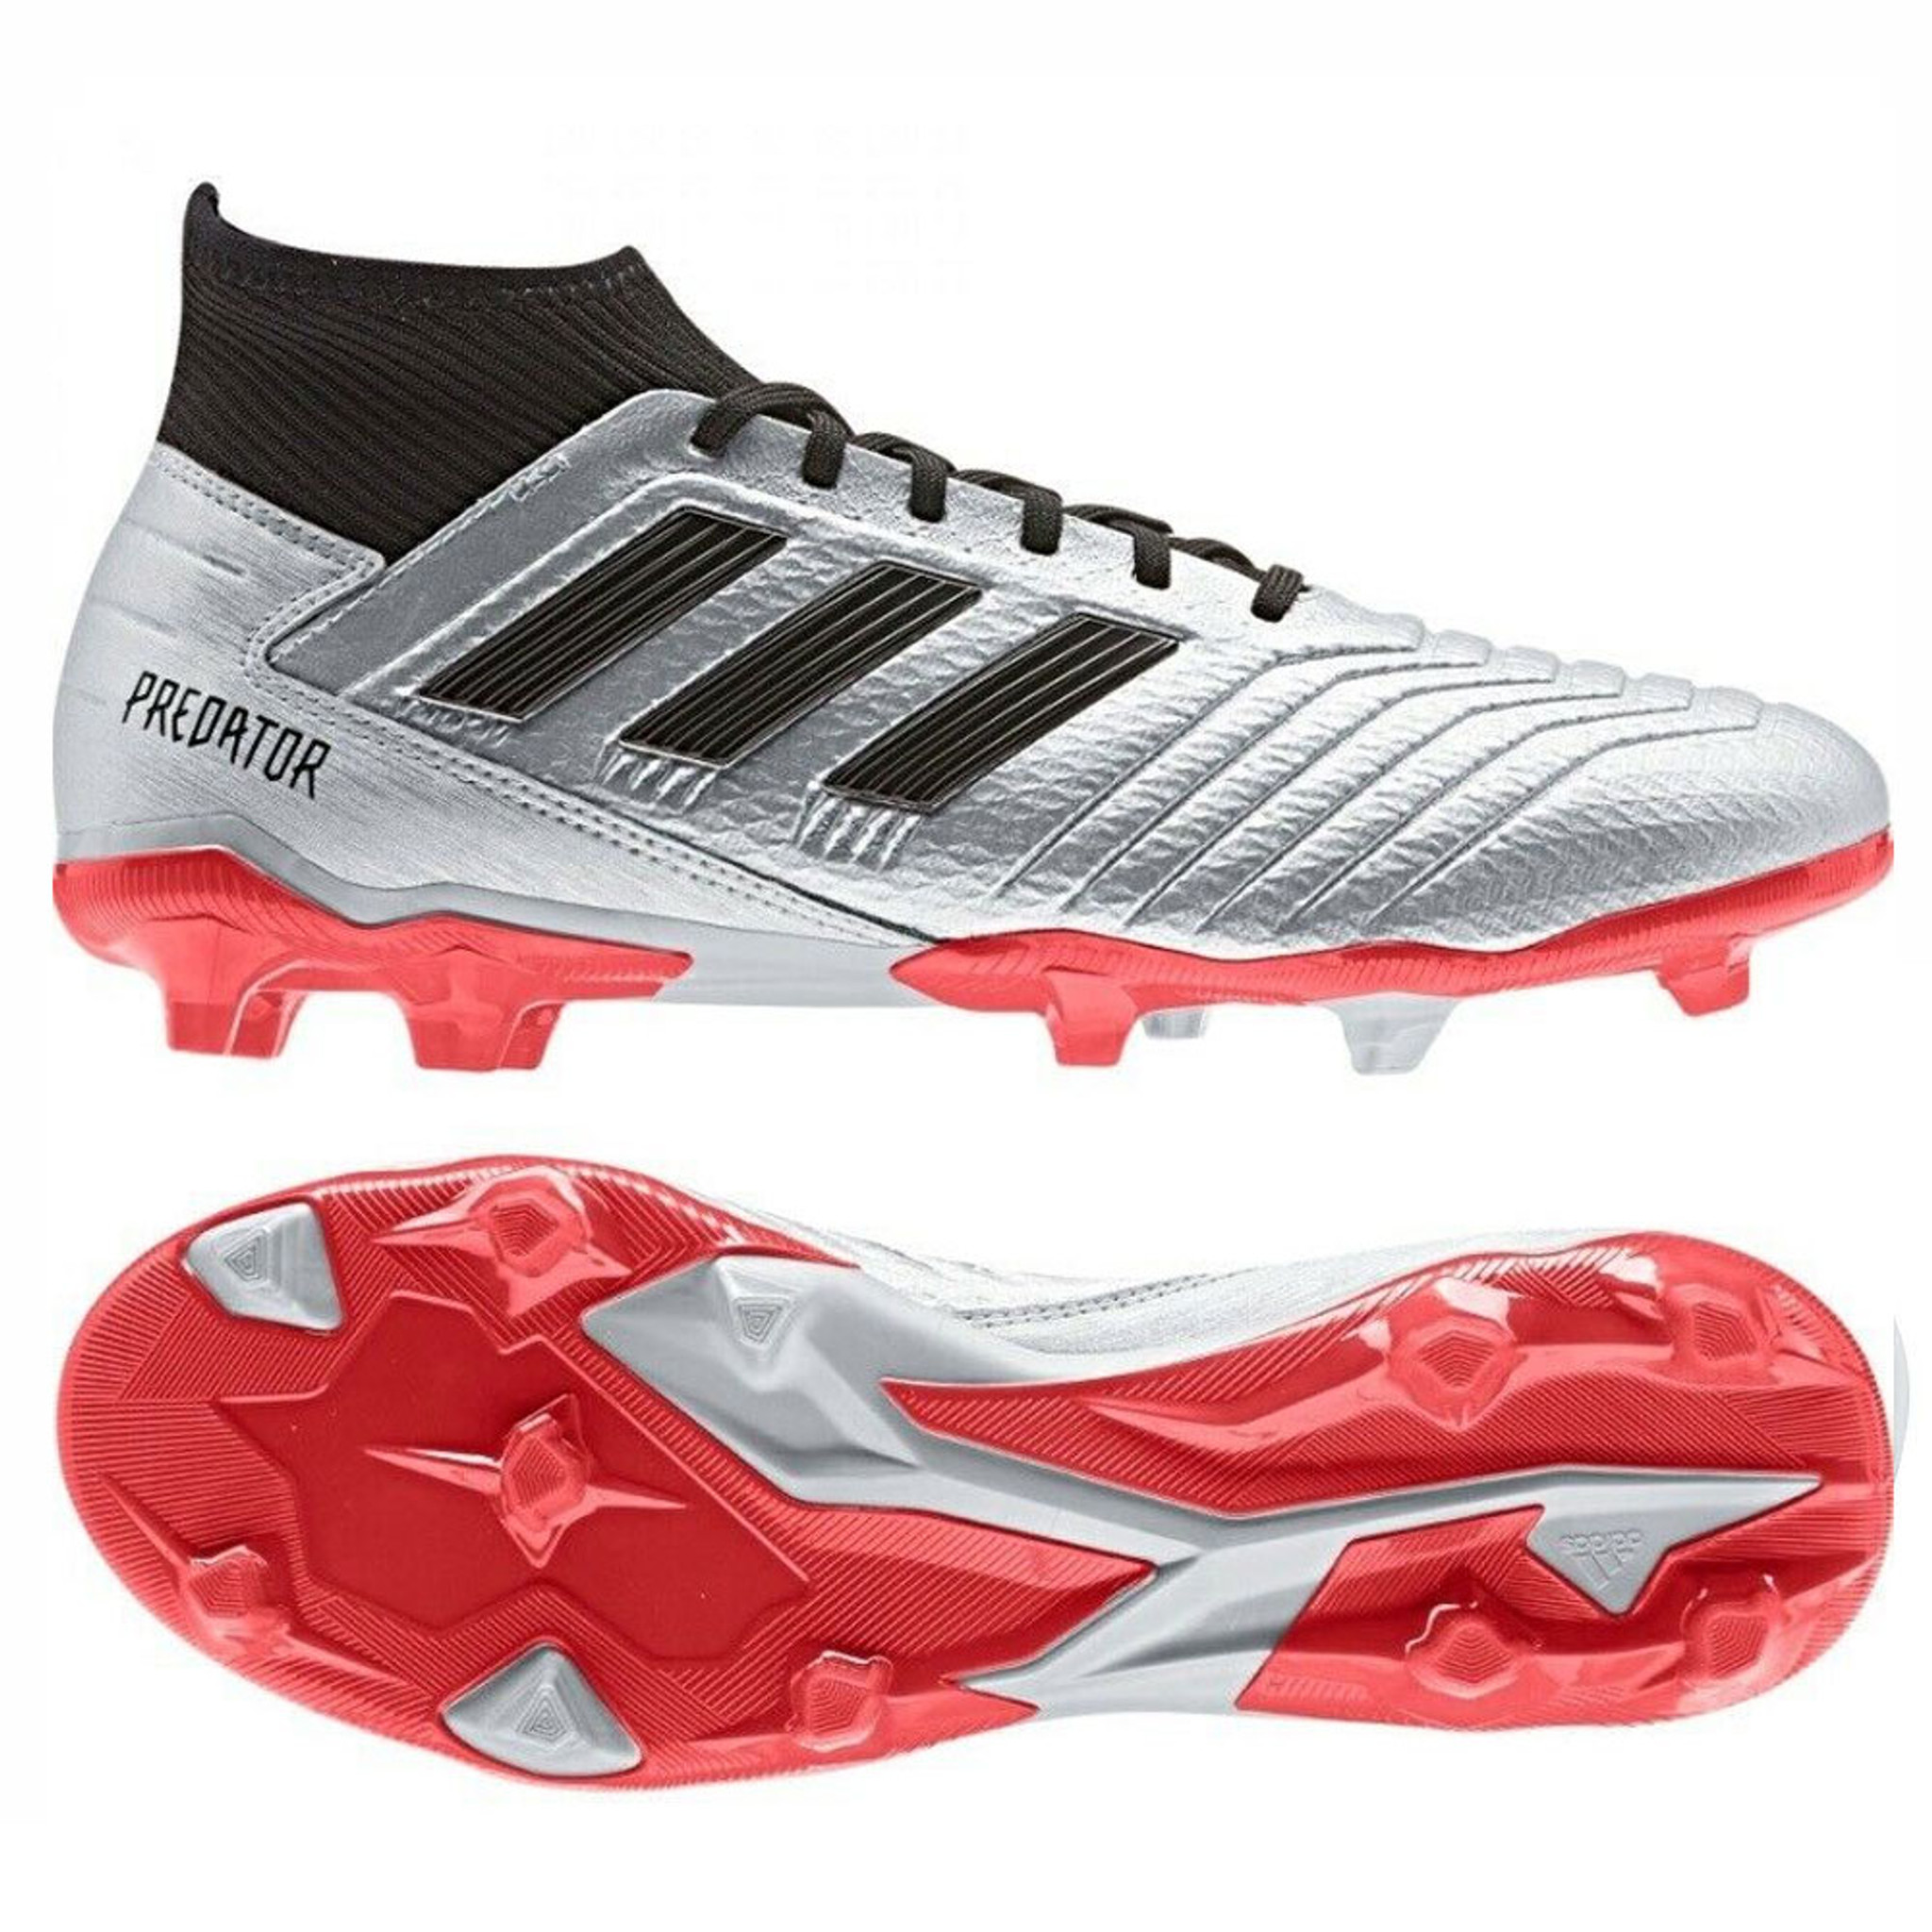 Pull out bundle Elegance Adidas Predator 19.3 FG Soccer Shoes - F35595 - KM Sports